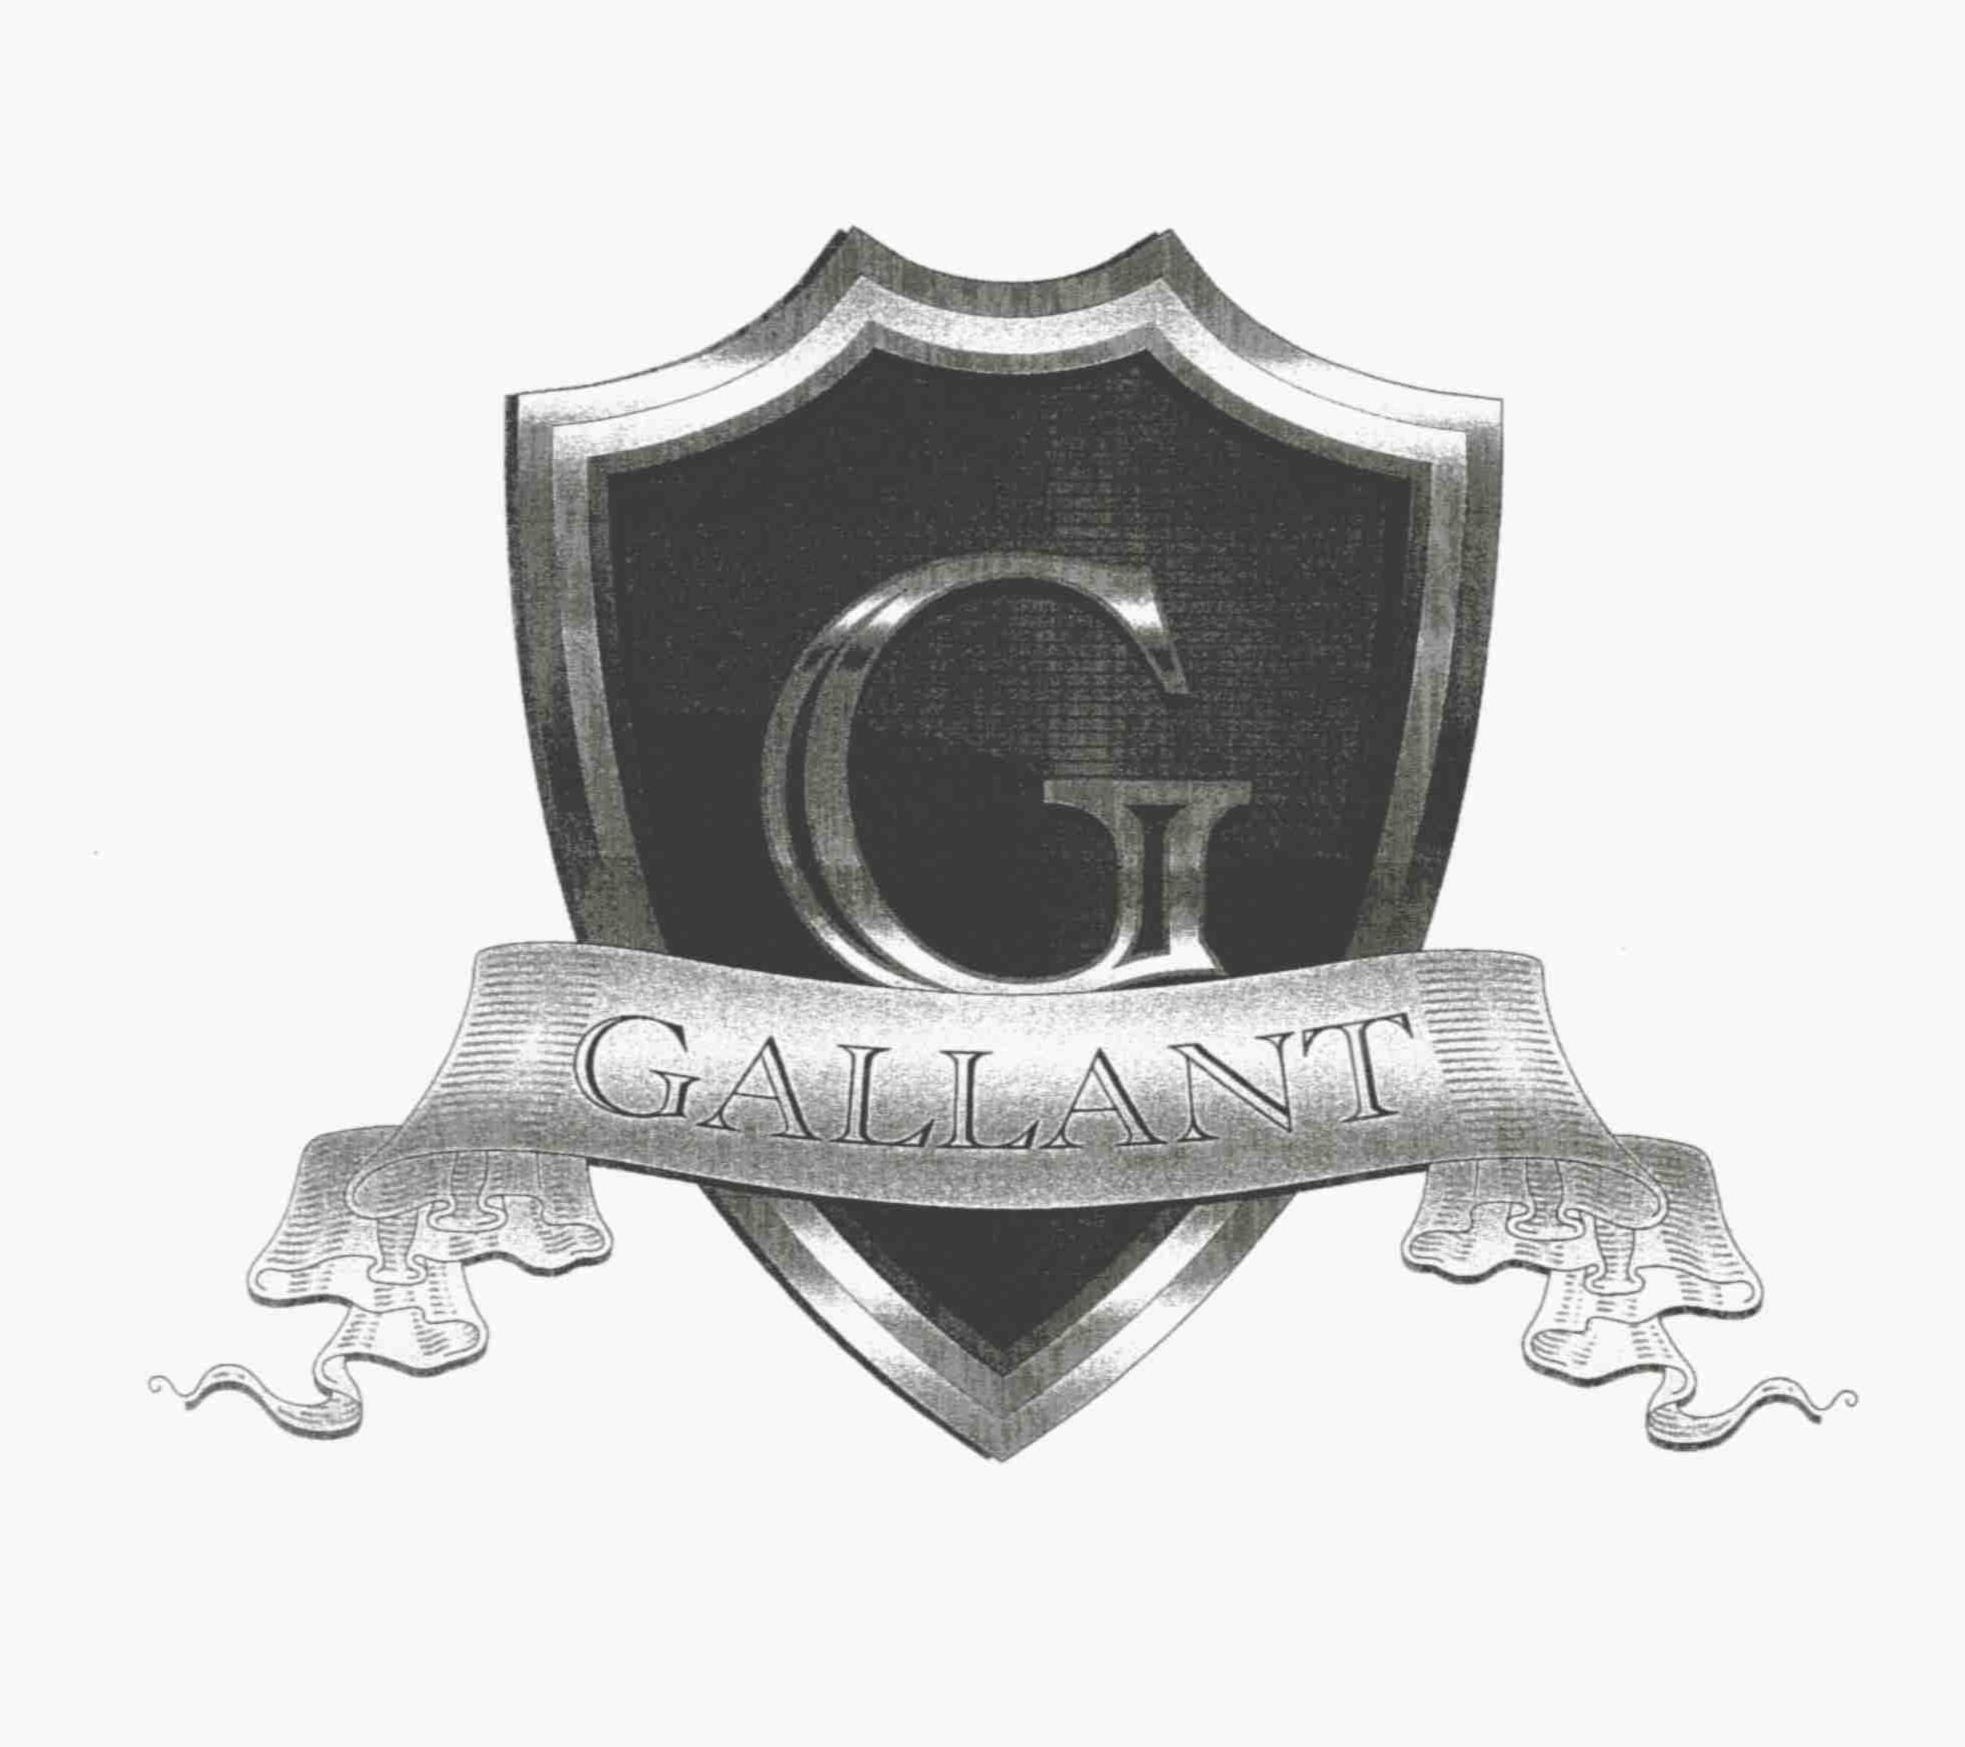 G GALLANT